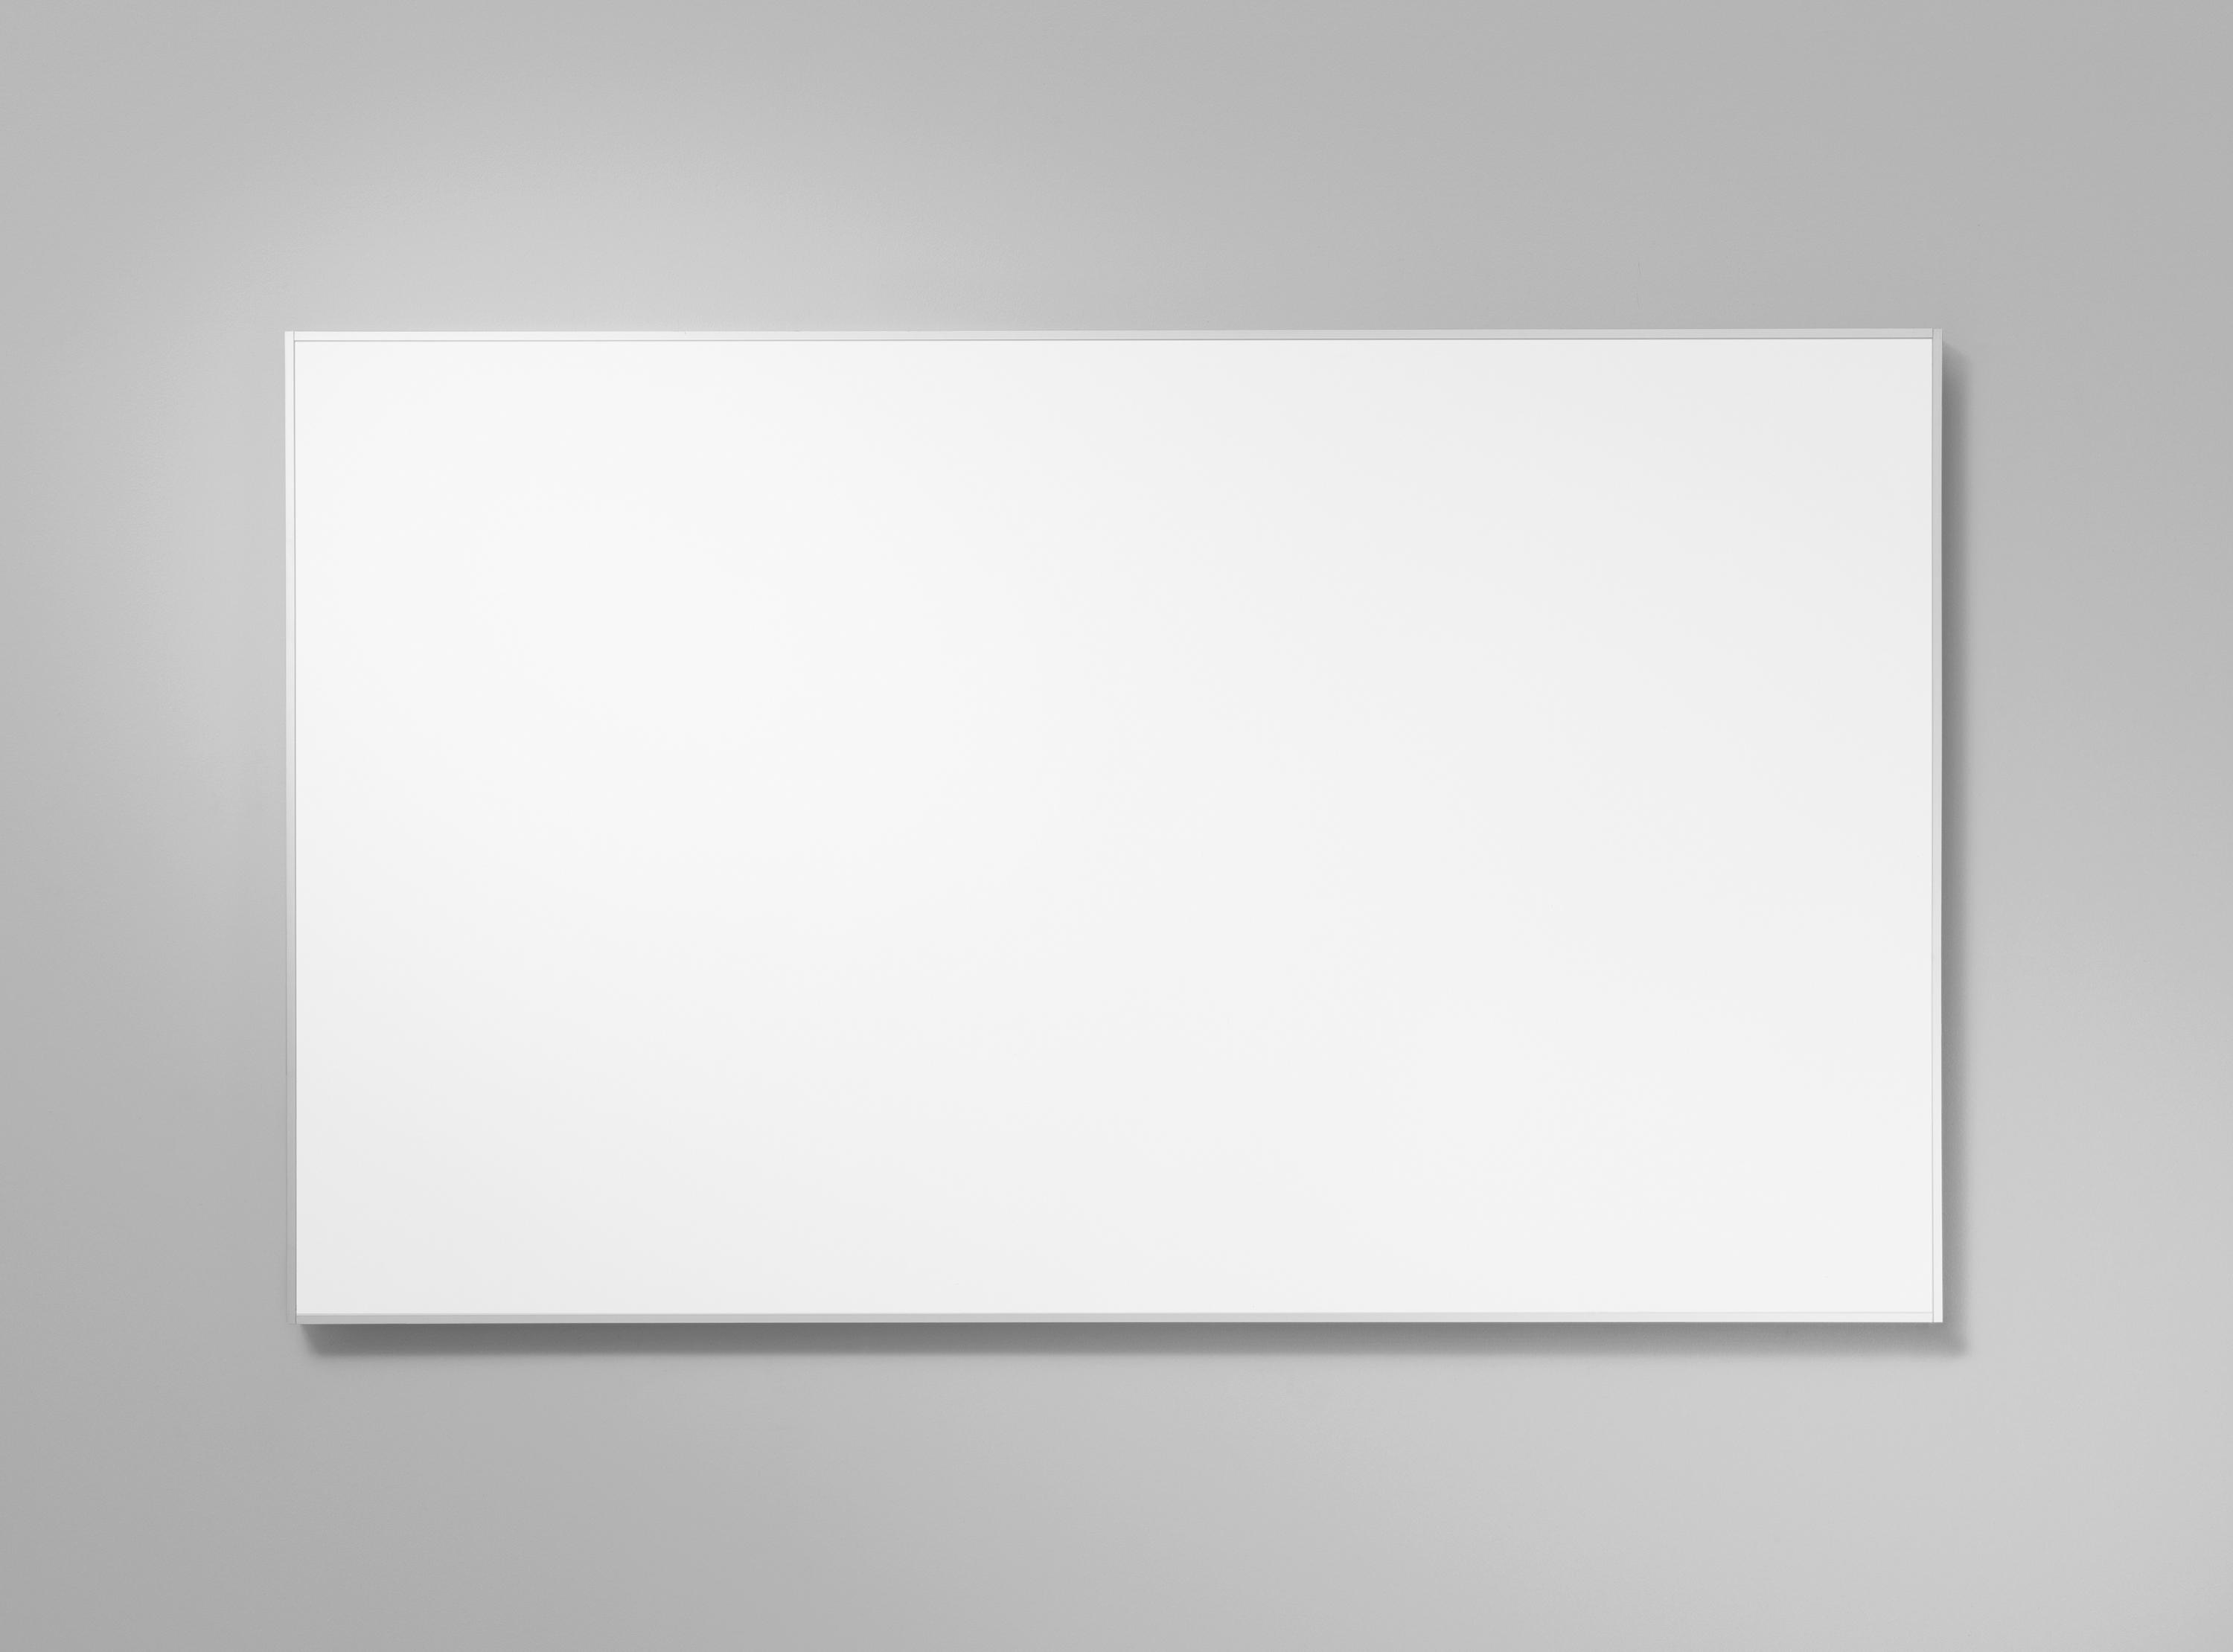 white writing board